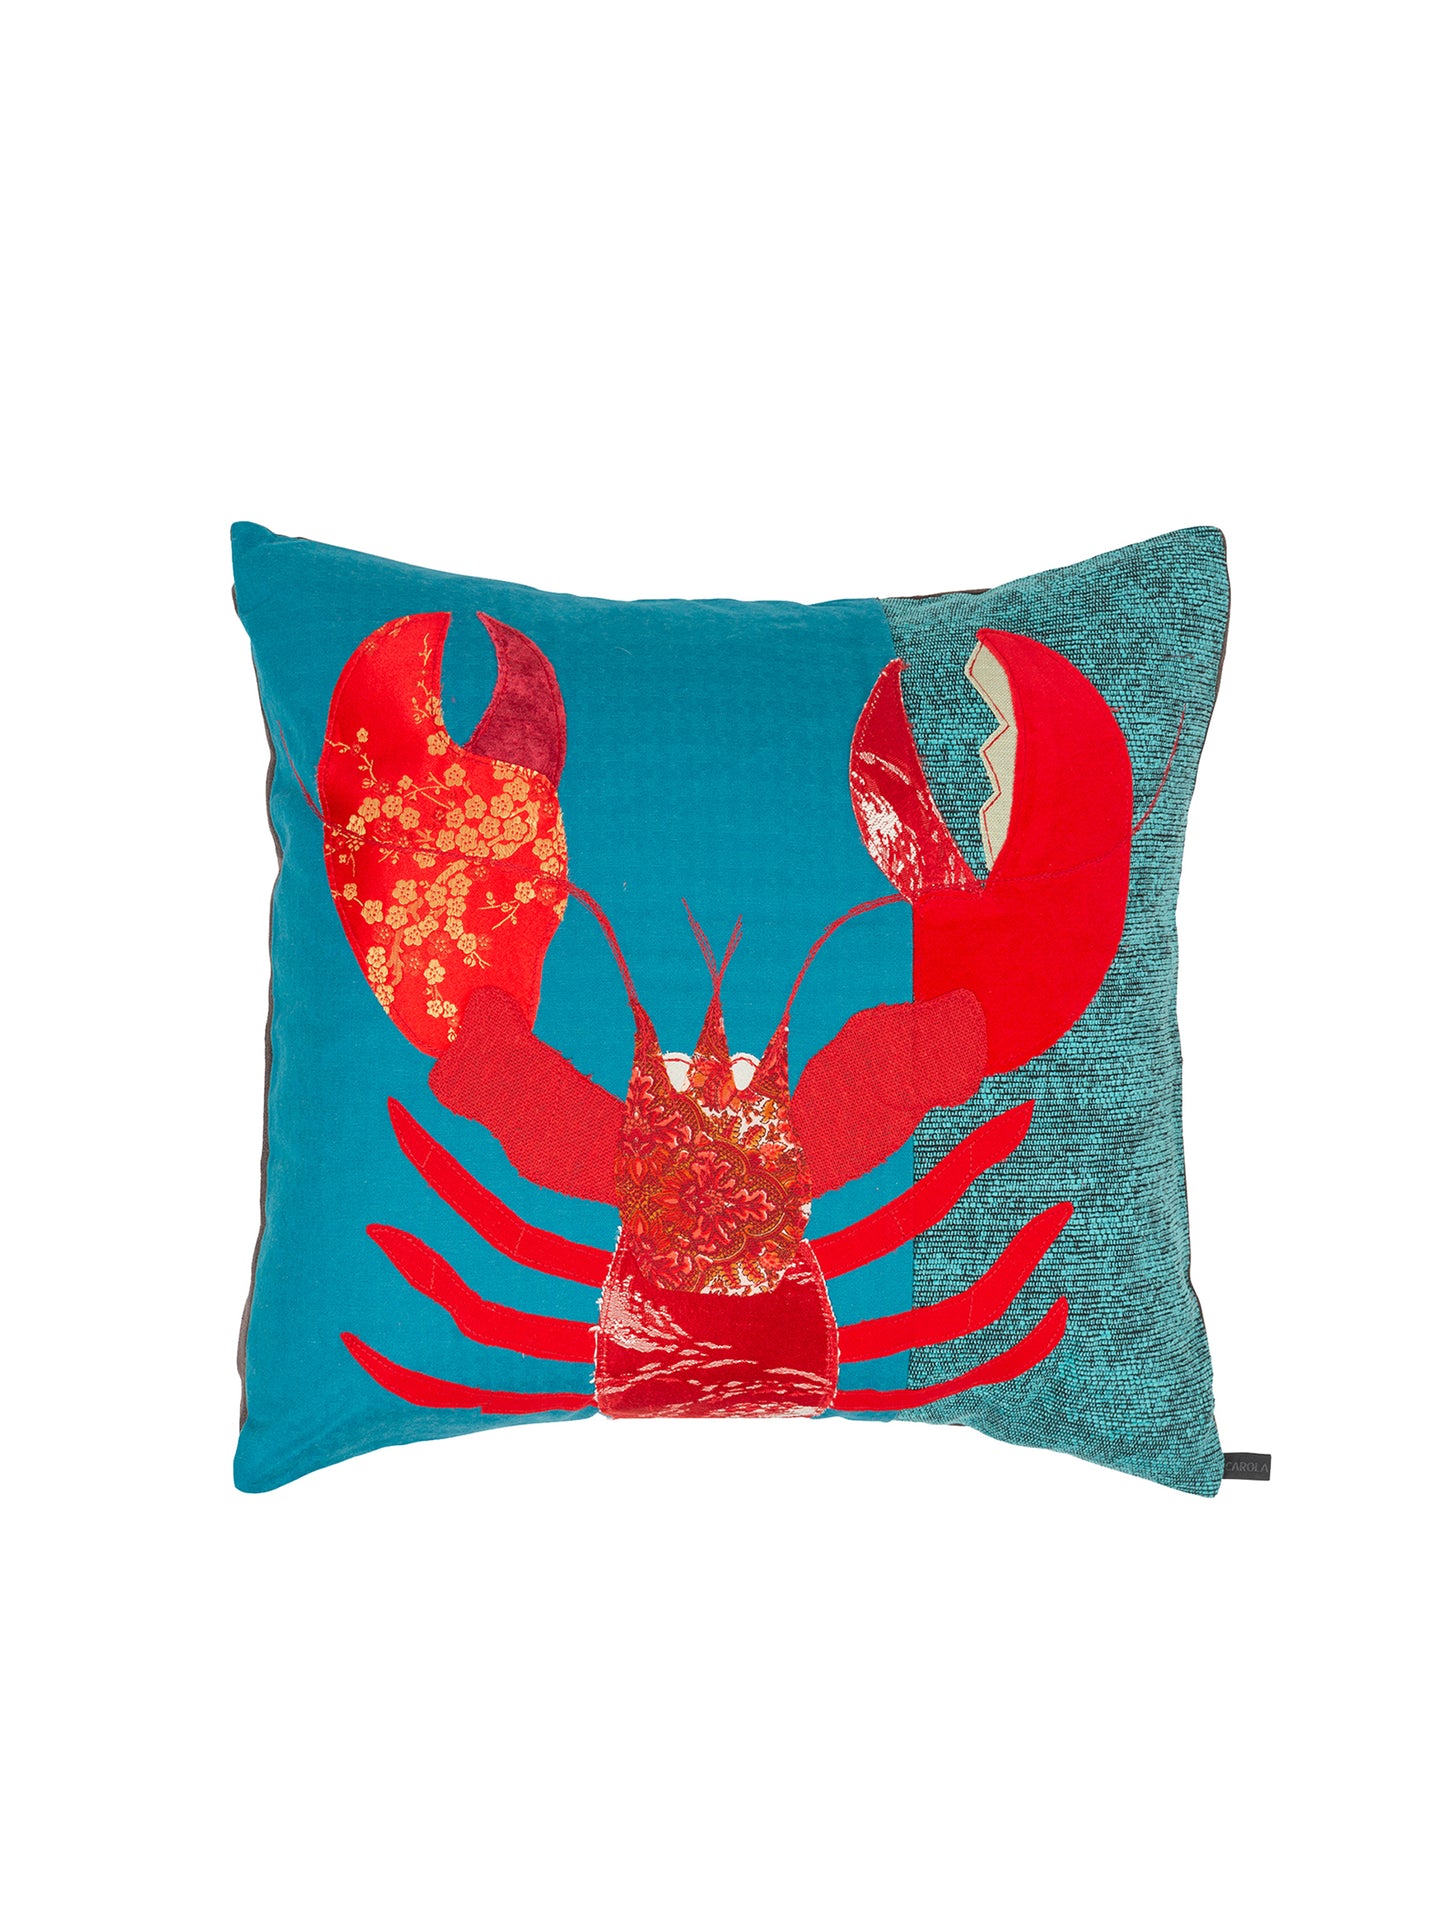 WT Carola van Dyke Red Lobster Pillow Weston Table